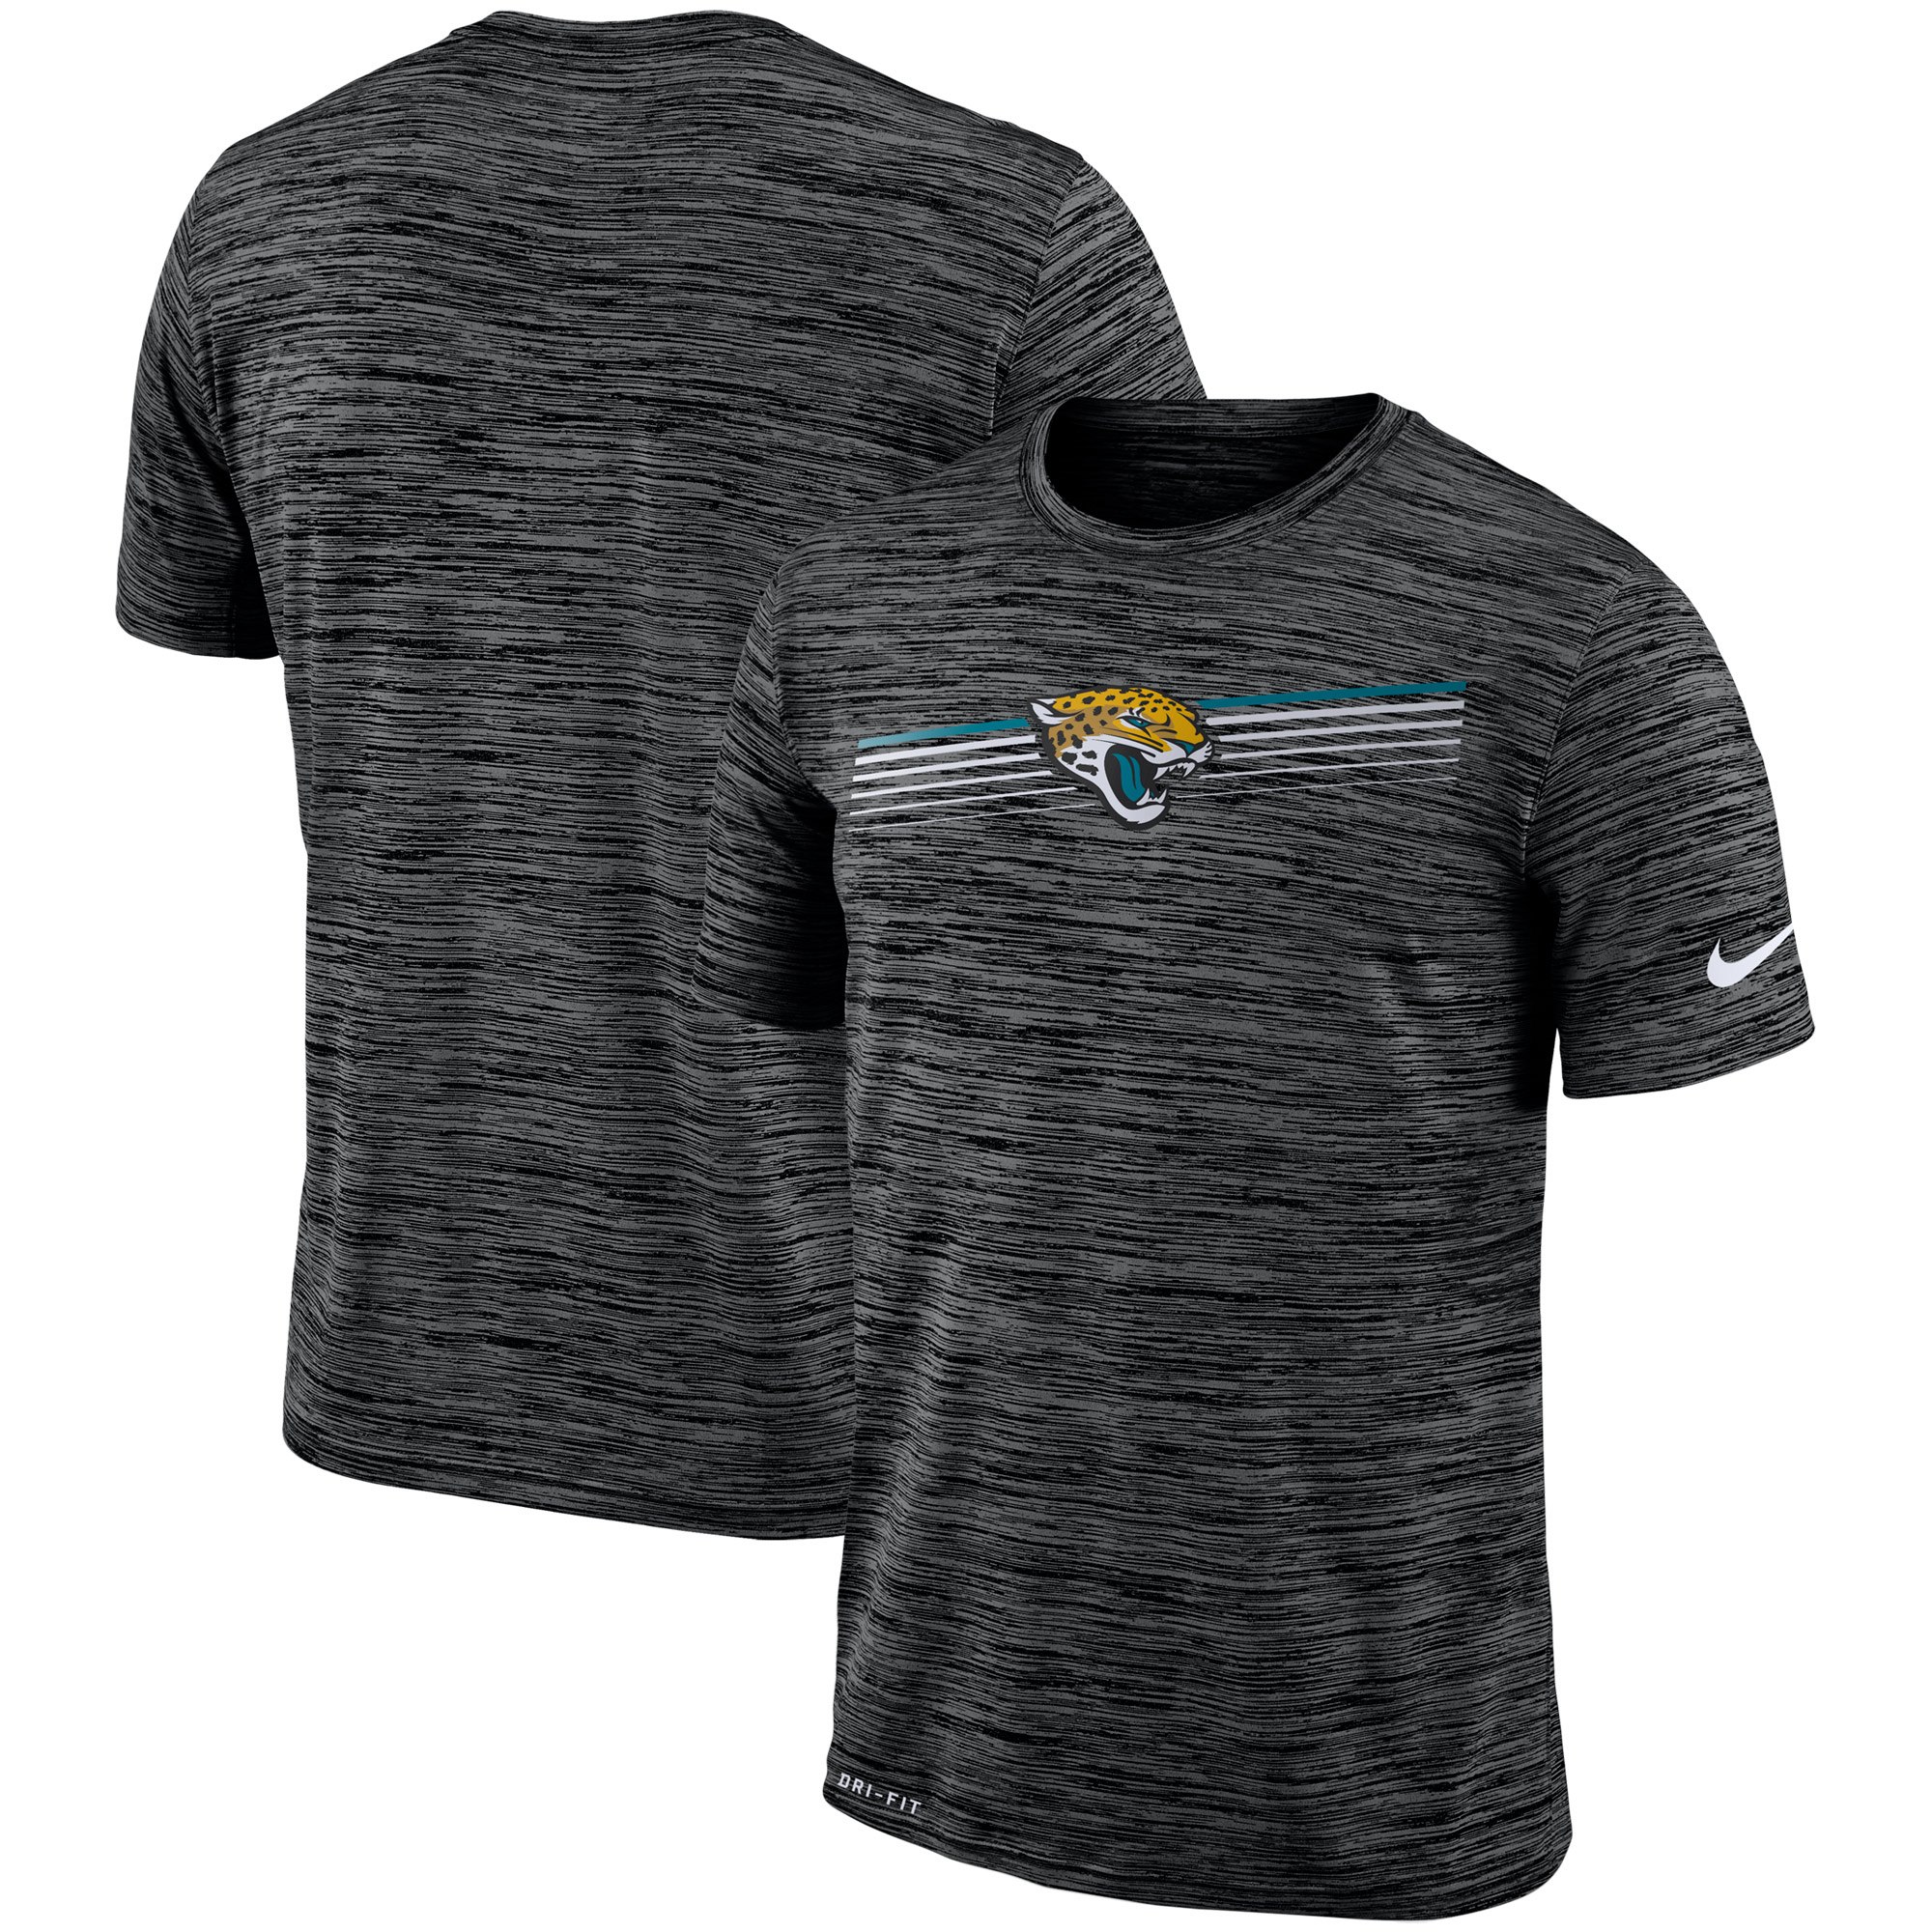 Jacksonville Jaguars Nike Sideline Velocity Performance T-Shirt Heathered Black